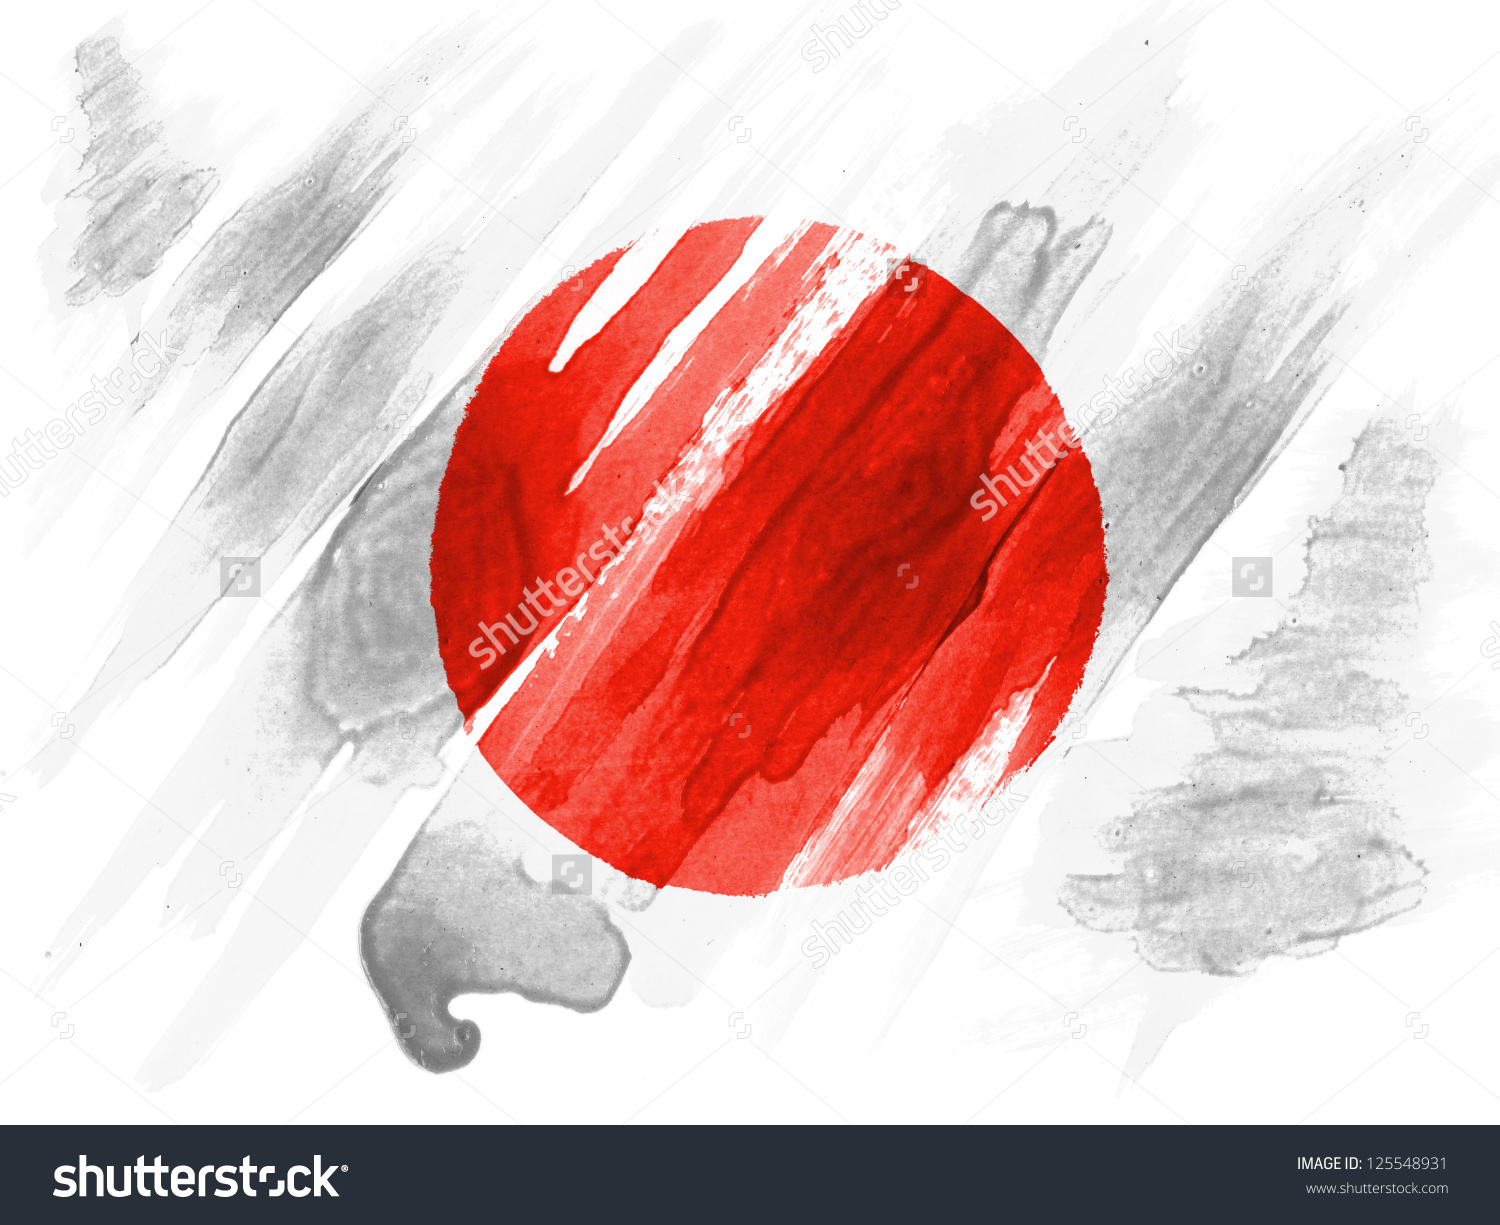 Flag Of Japan #10